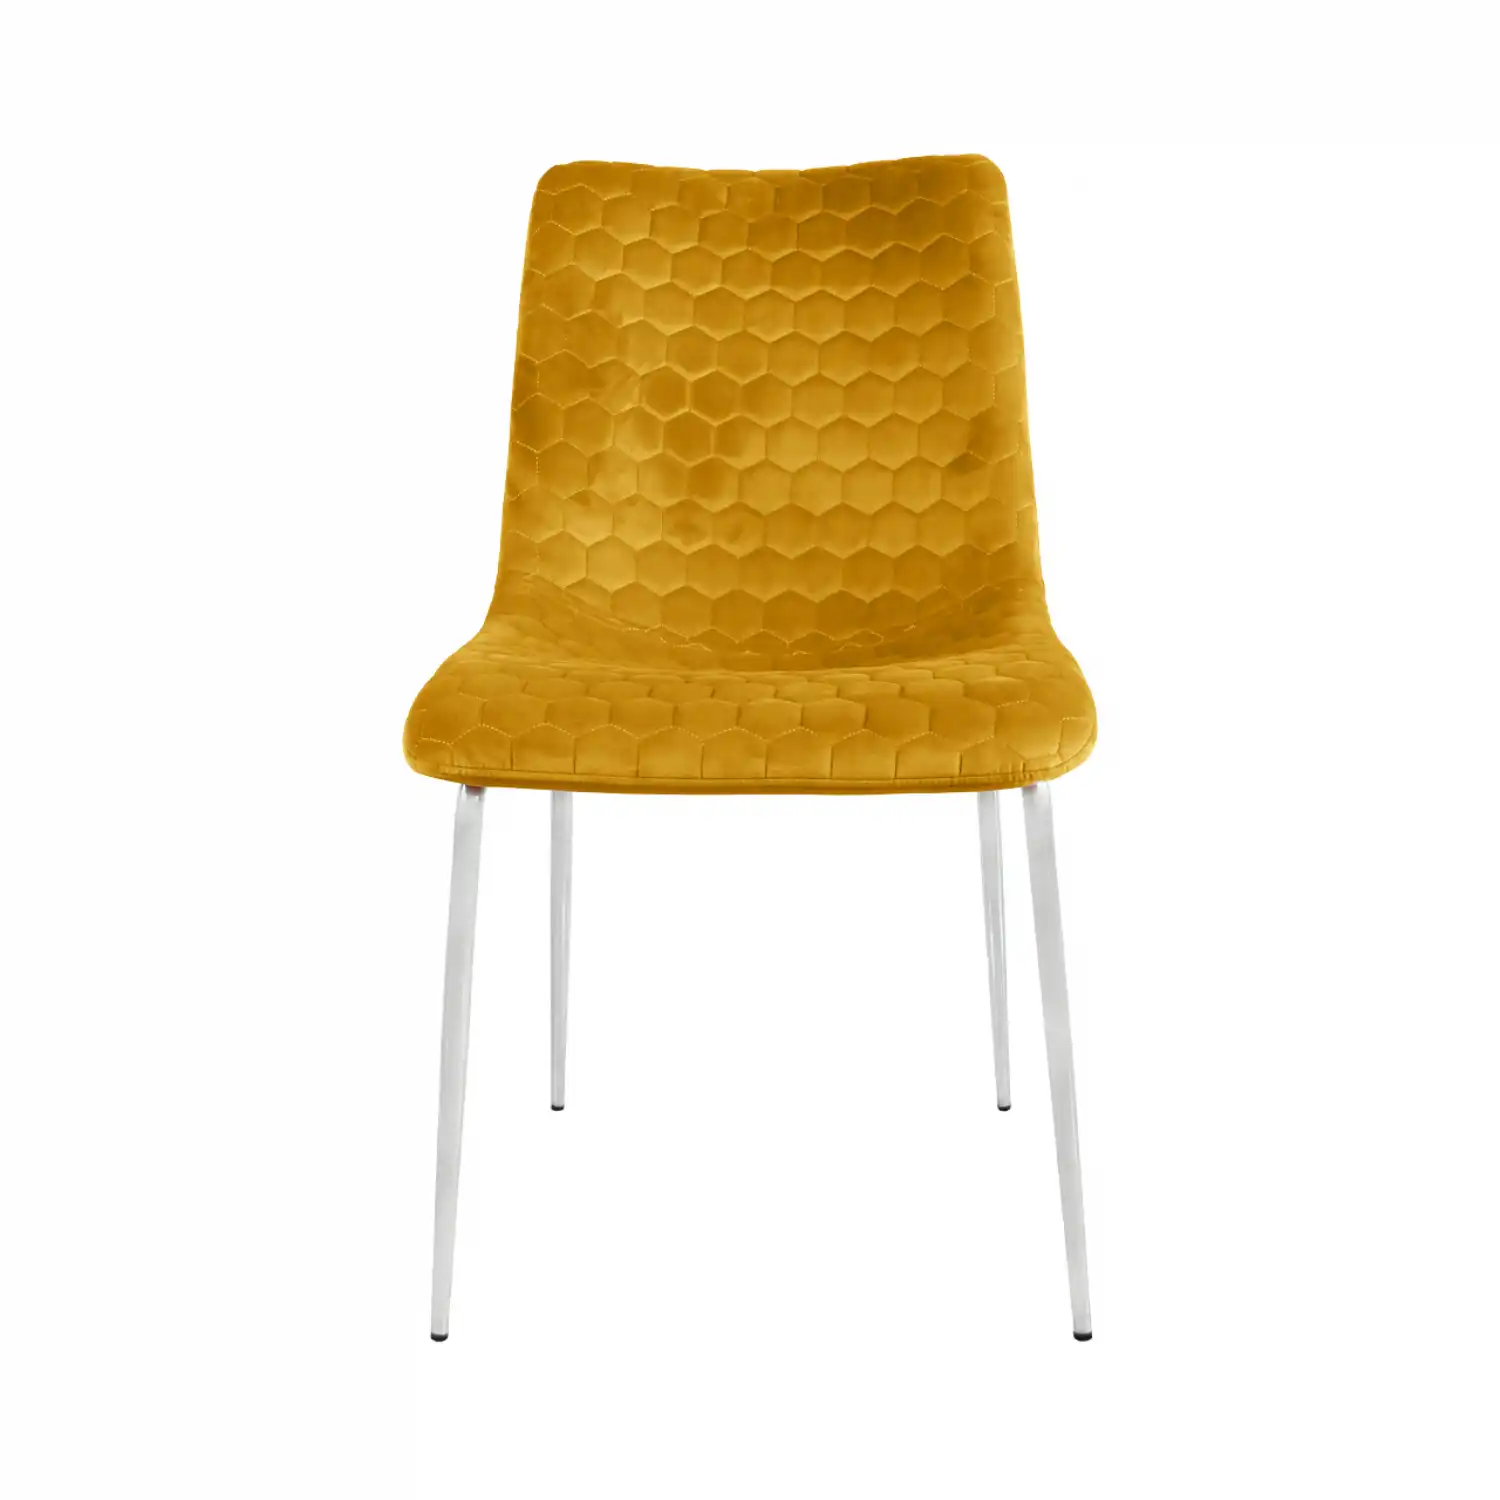 Mustard Dining Chair Chrome Legs